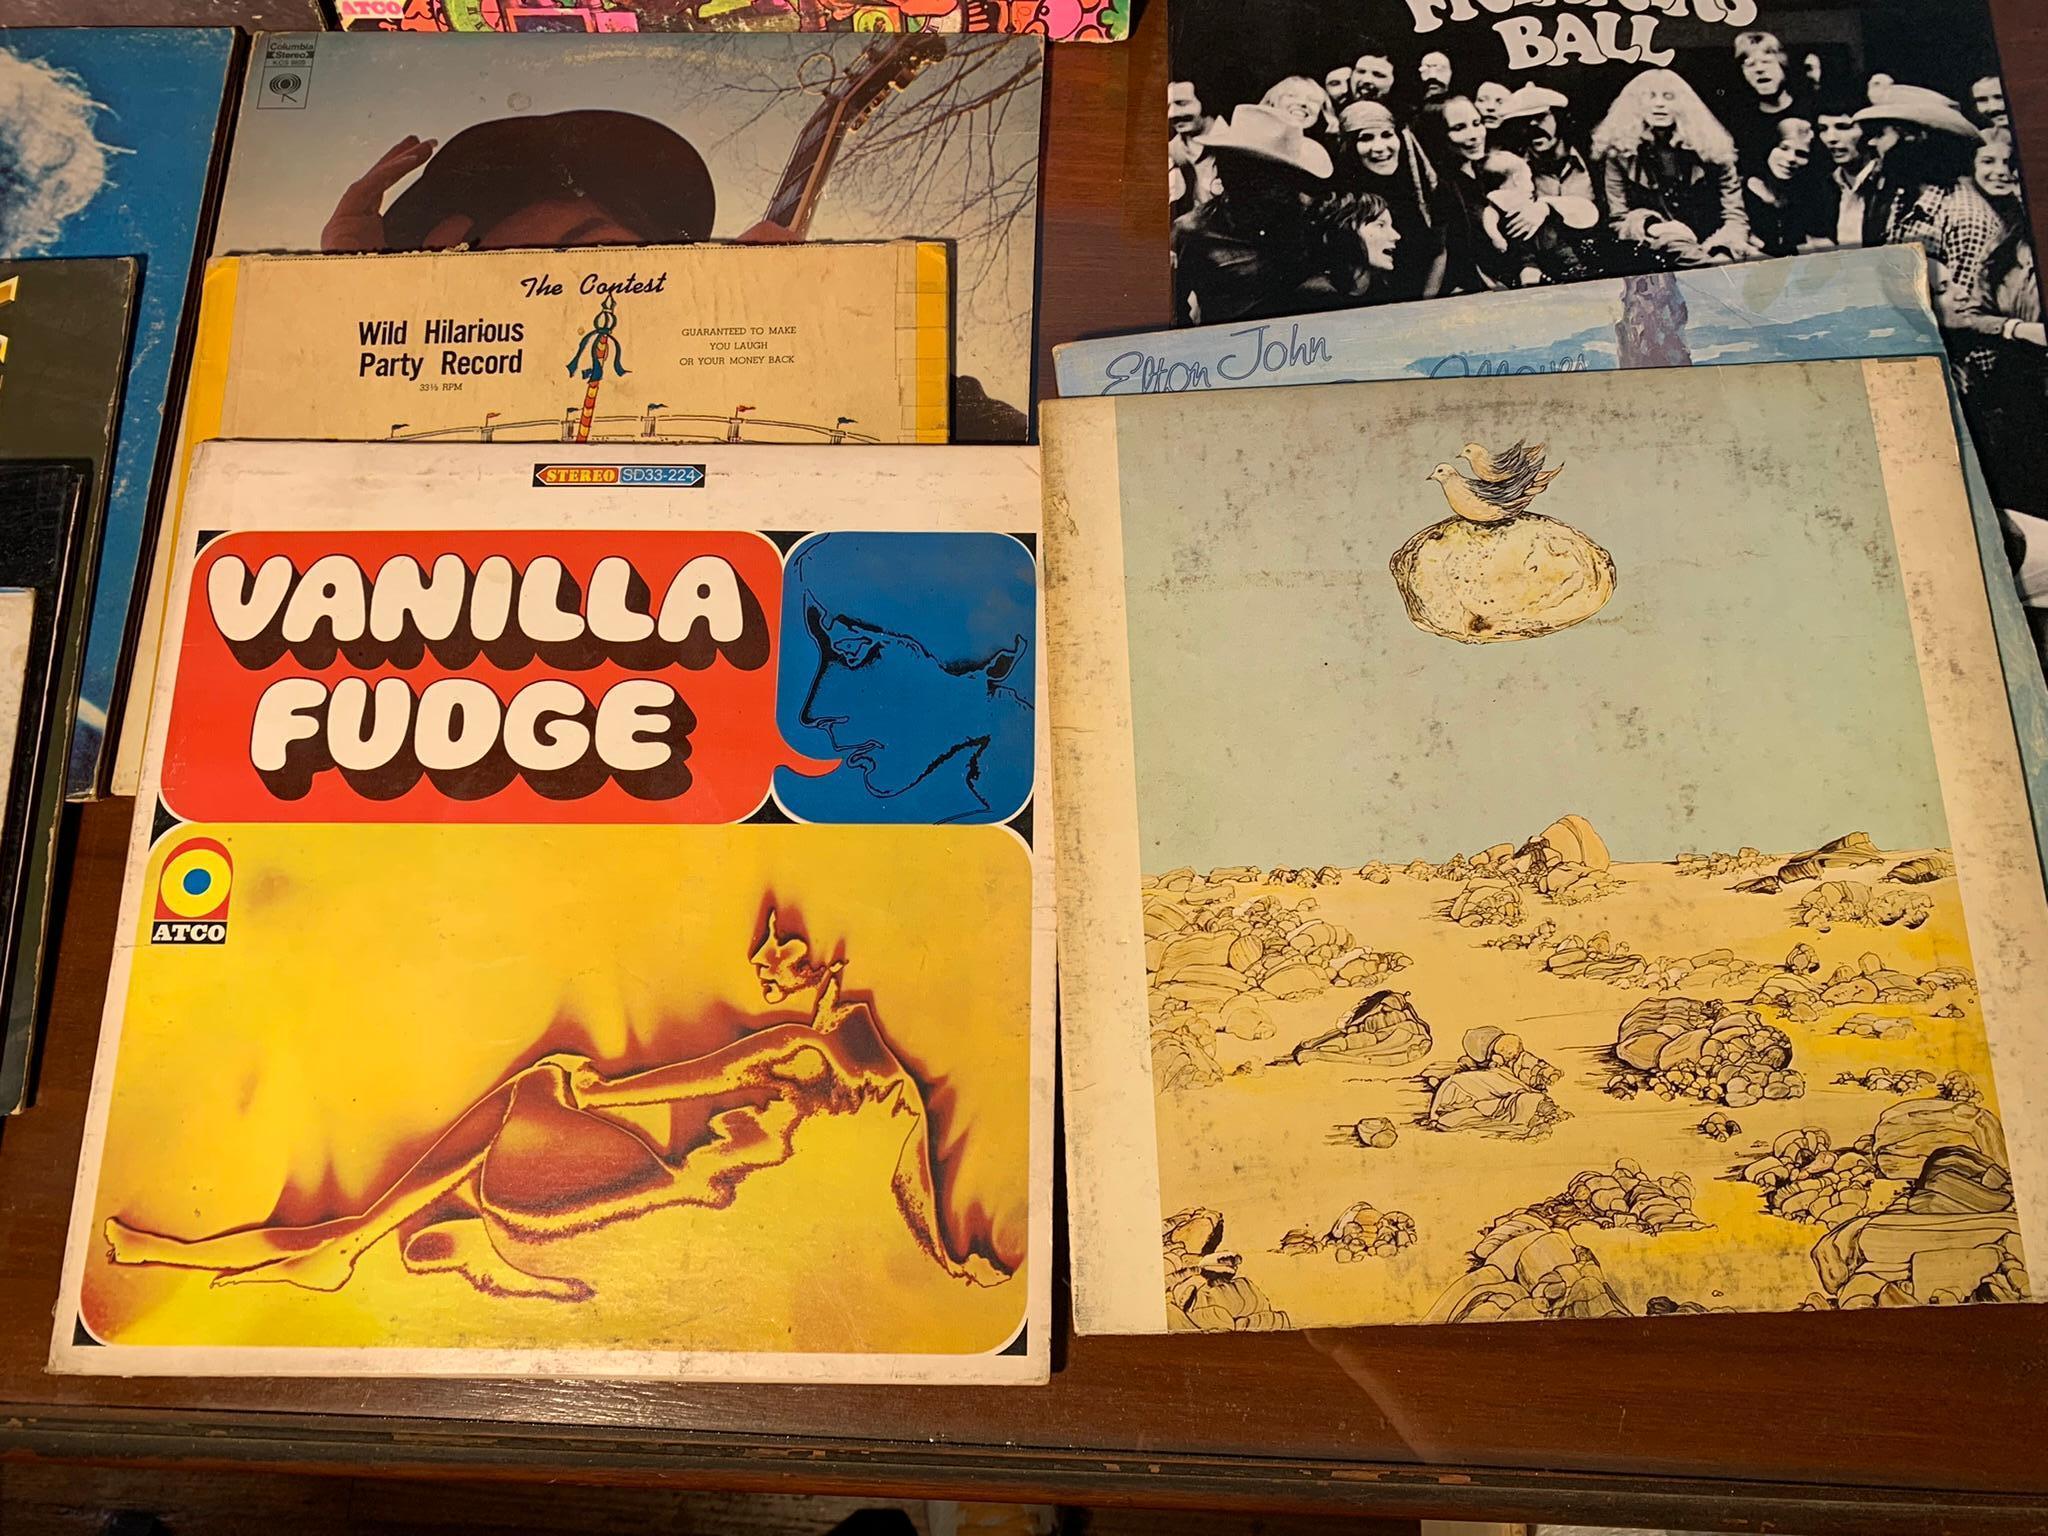 Group of 15 Records - Vanilla Fudge, Donovan, Elton John, Styx & More